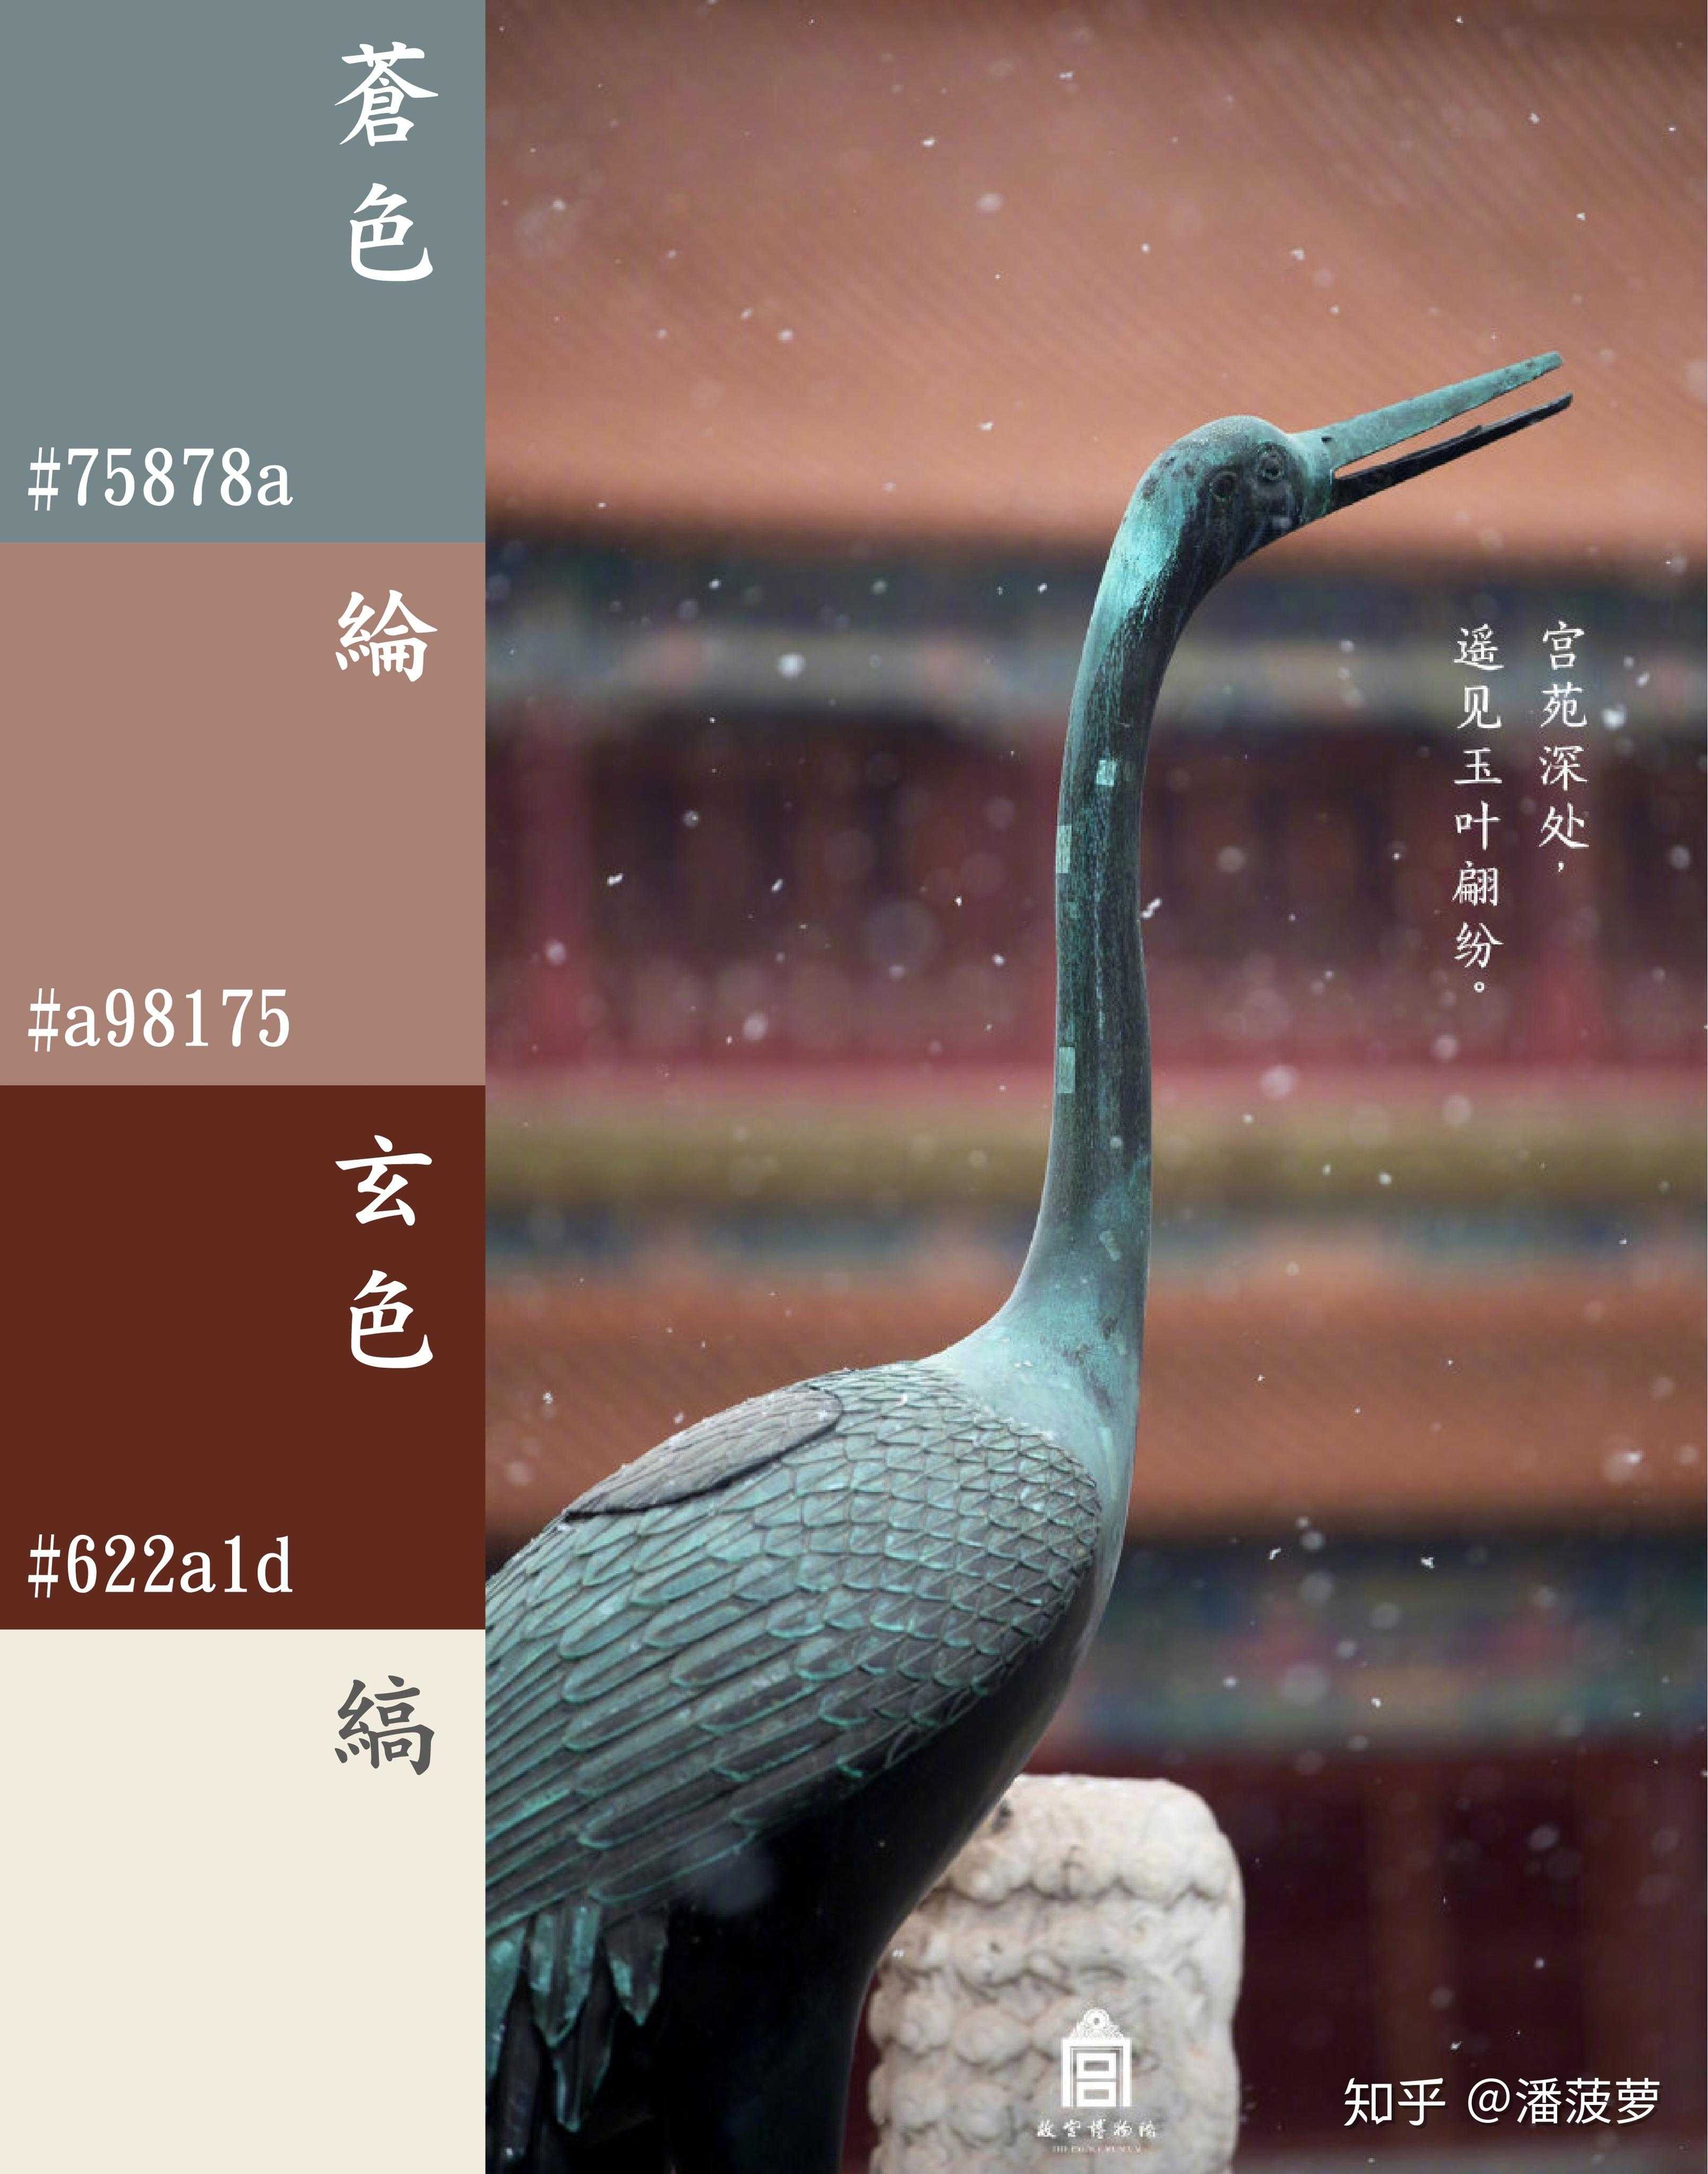 newburywedding 紫禁城初雪太美了 做了个中国传统色色卡